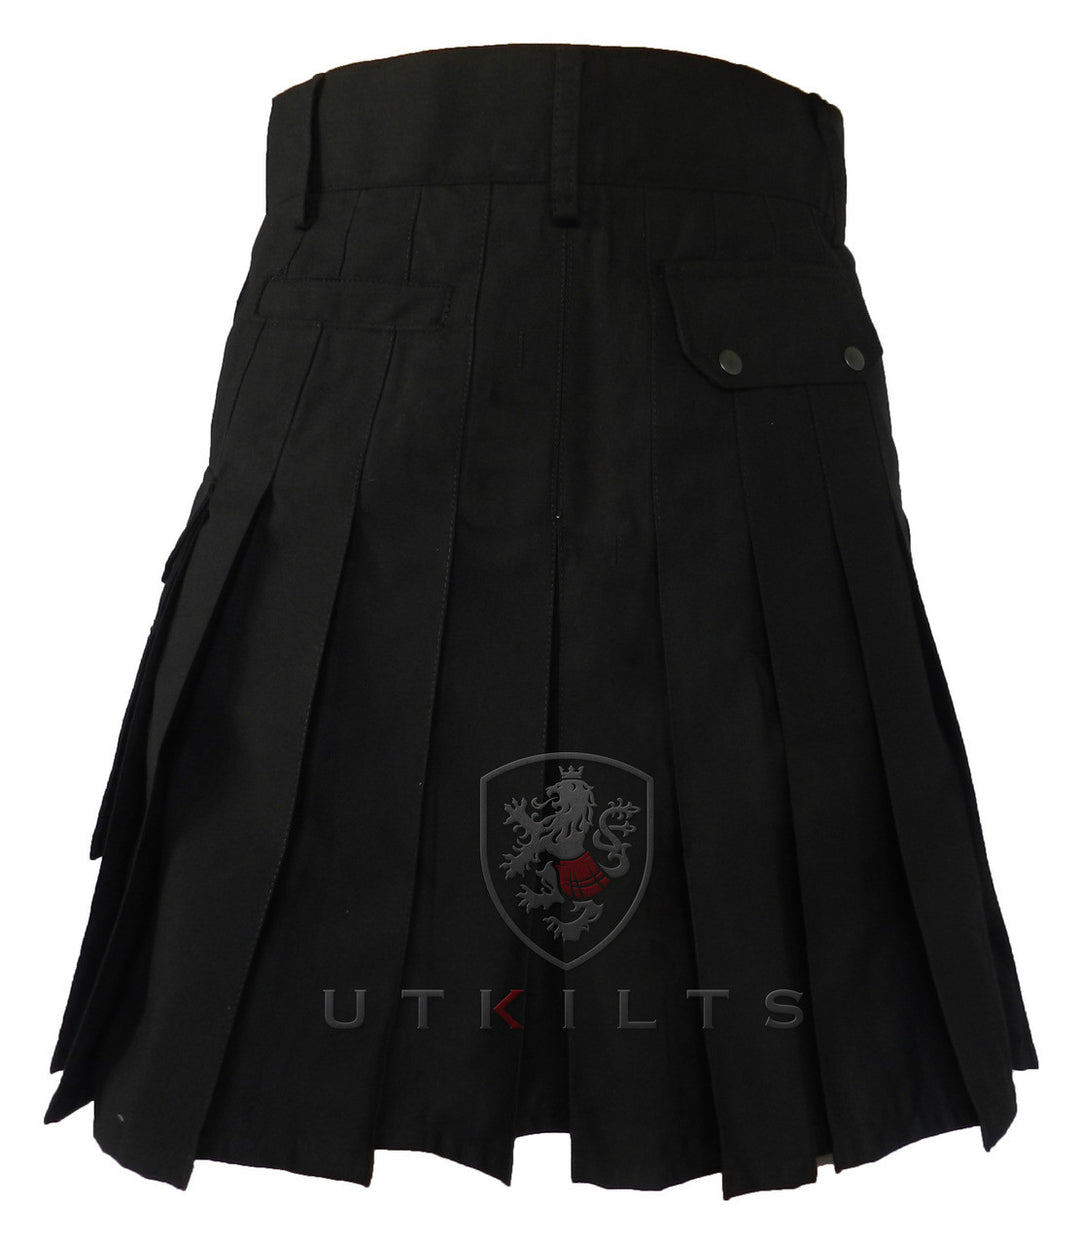 Ultimate Black Utility Kilt with Comfort Waist - 21 inch length